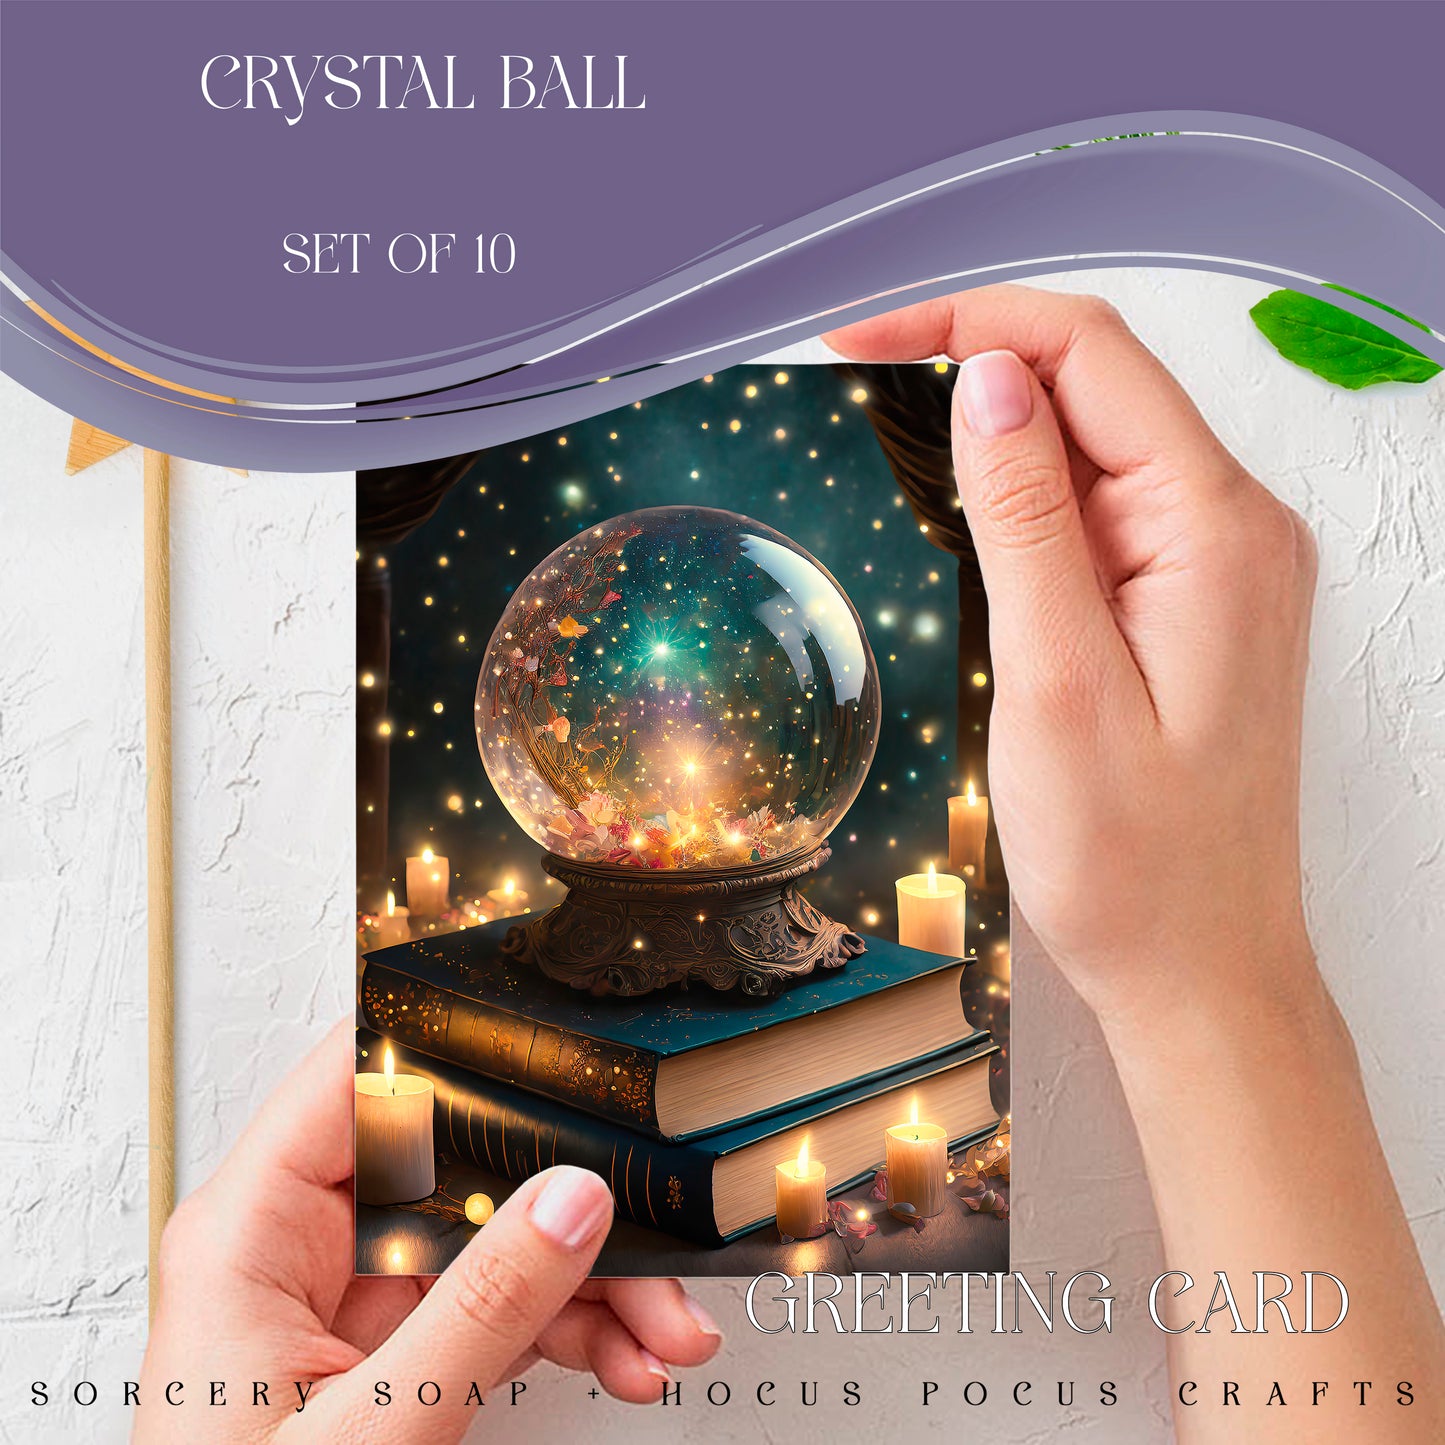 Crystal Ball Greeting Card